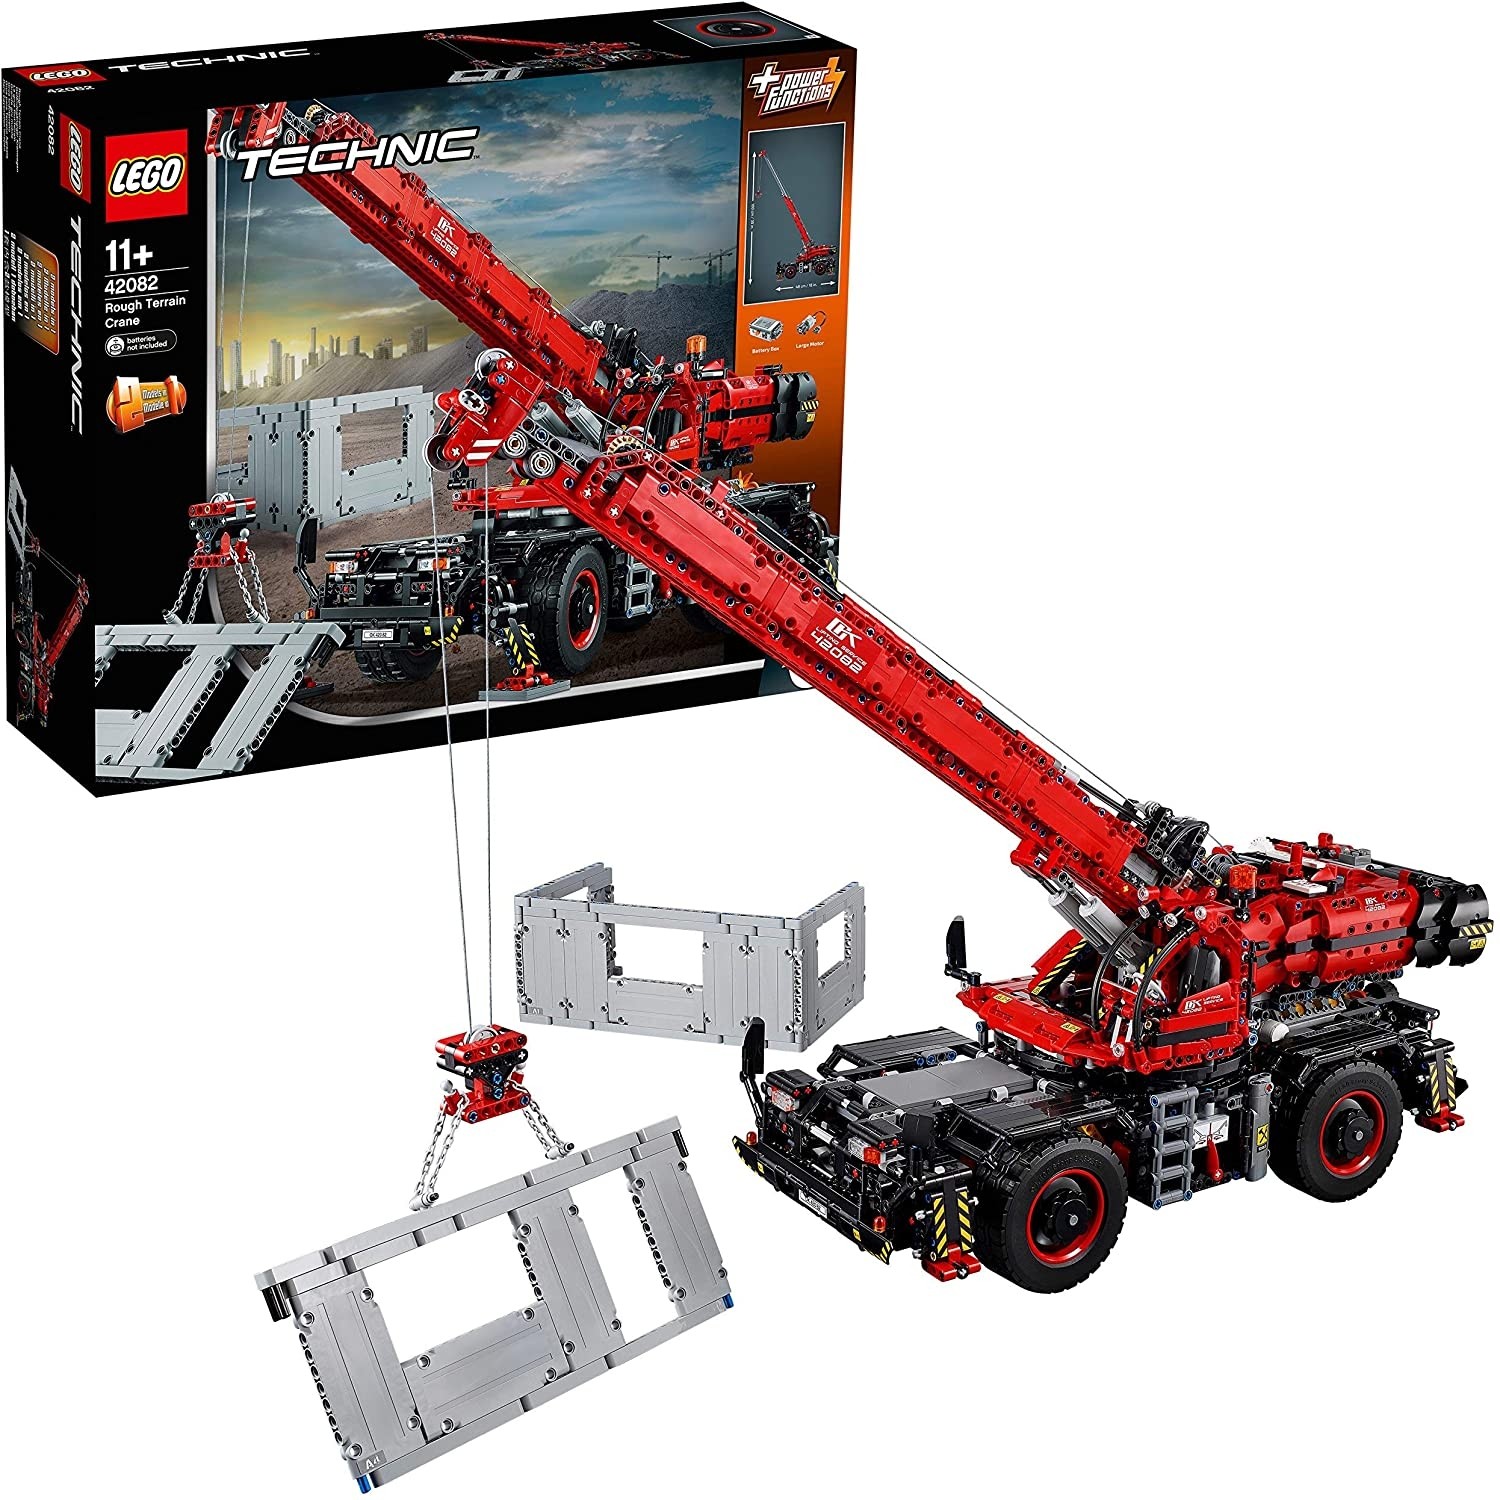 GRANDE GRU MOBILE - LEGO TECNIC 42082